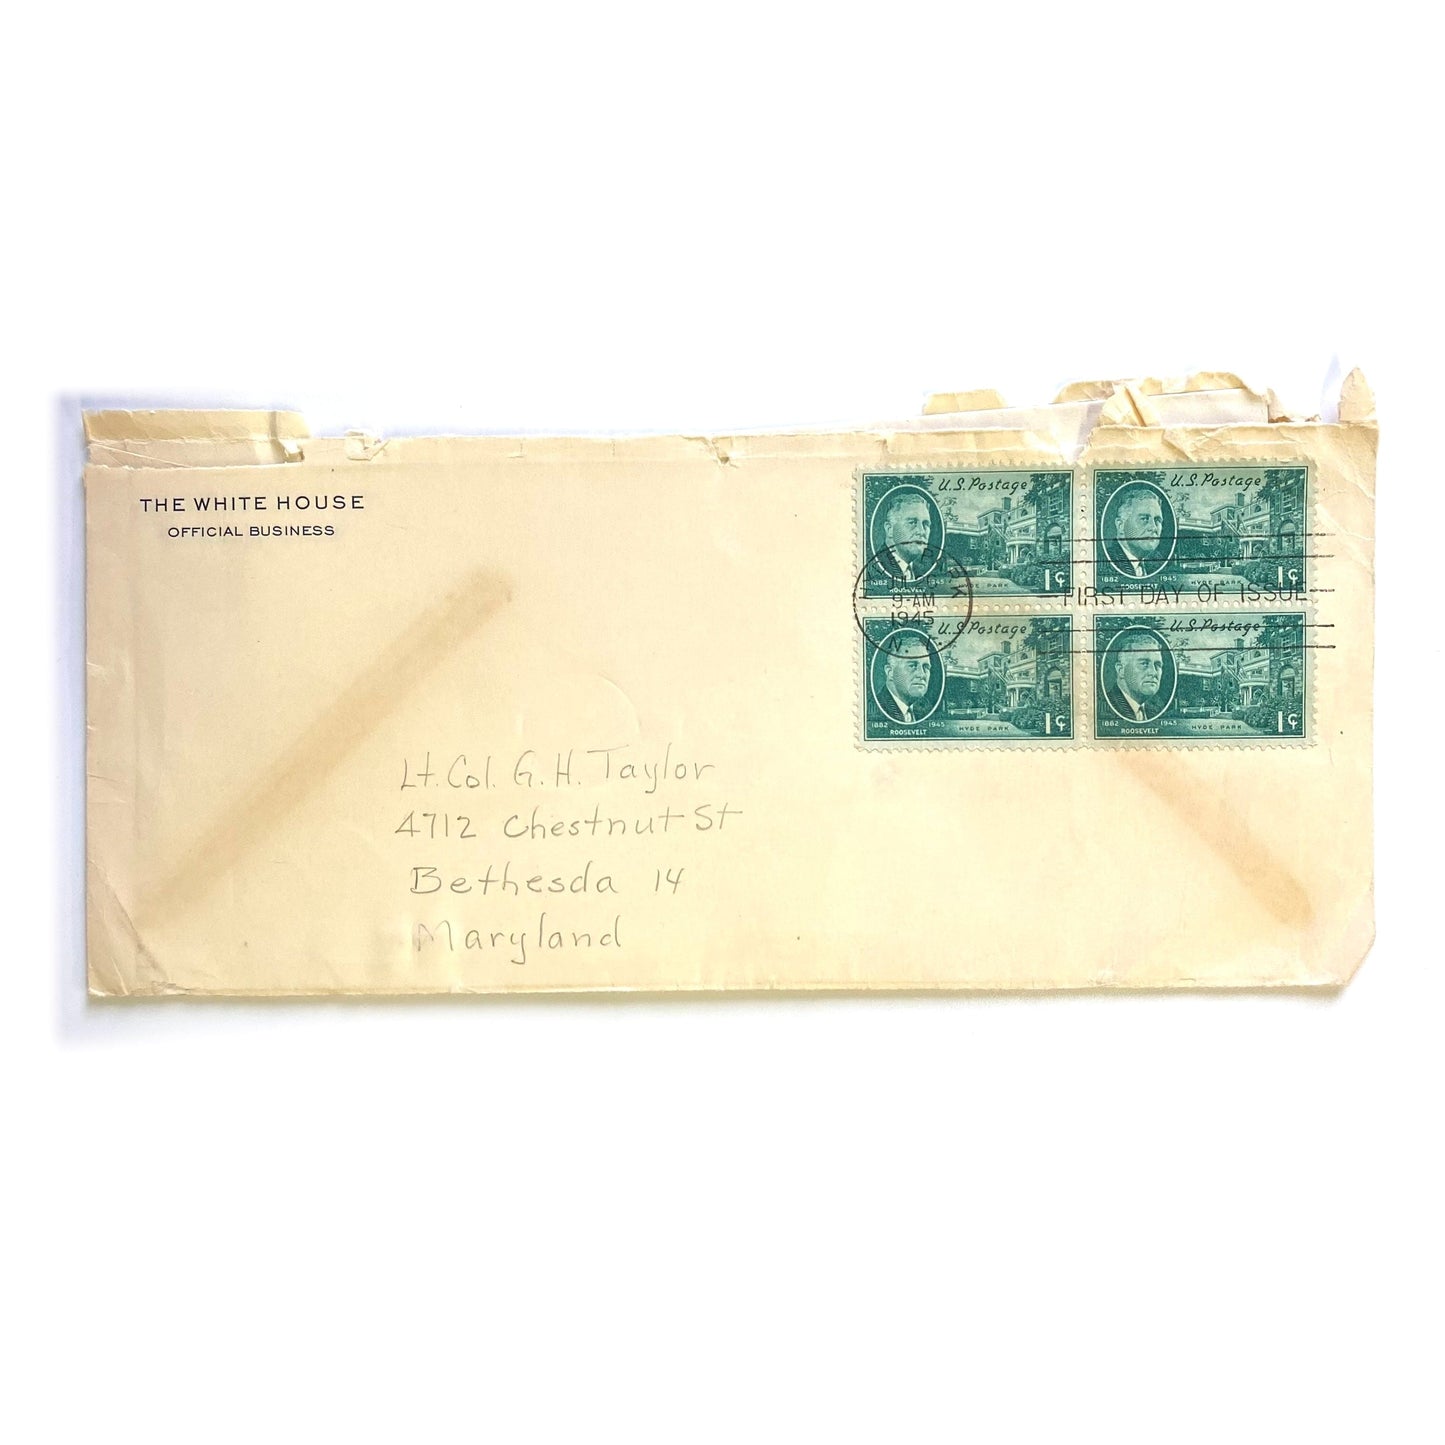 Vintage Envelope Letter The White House Office Business - “Lt. Col GH Taylor” 1945